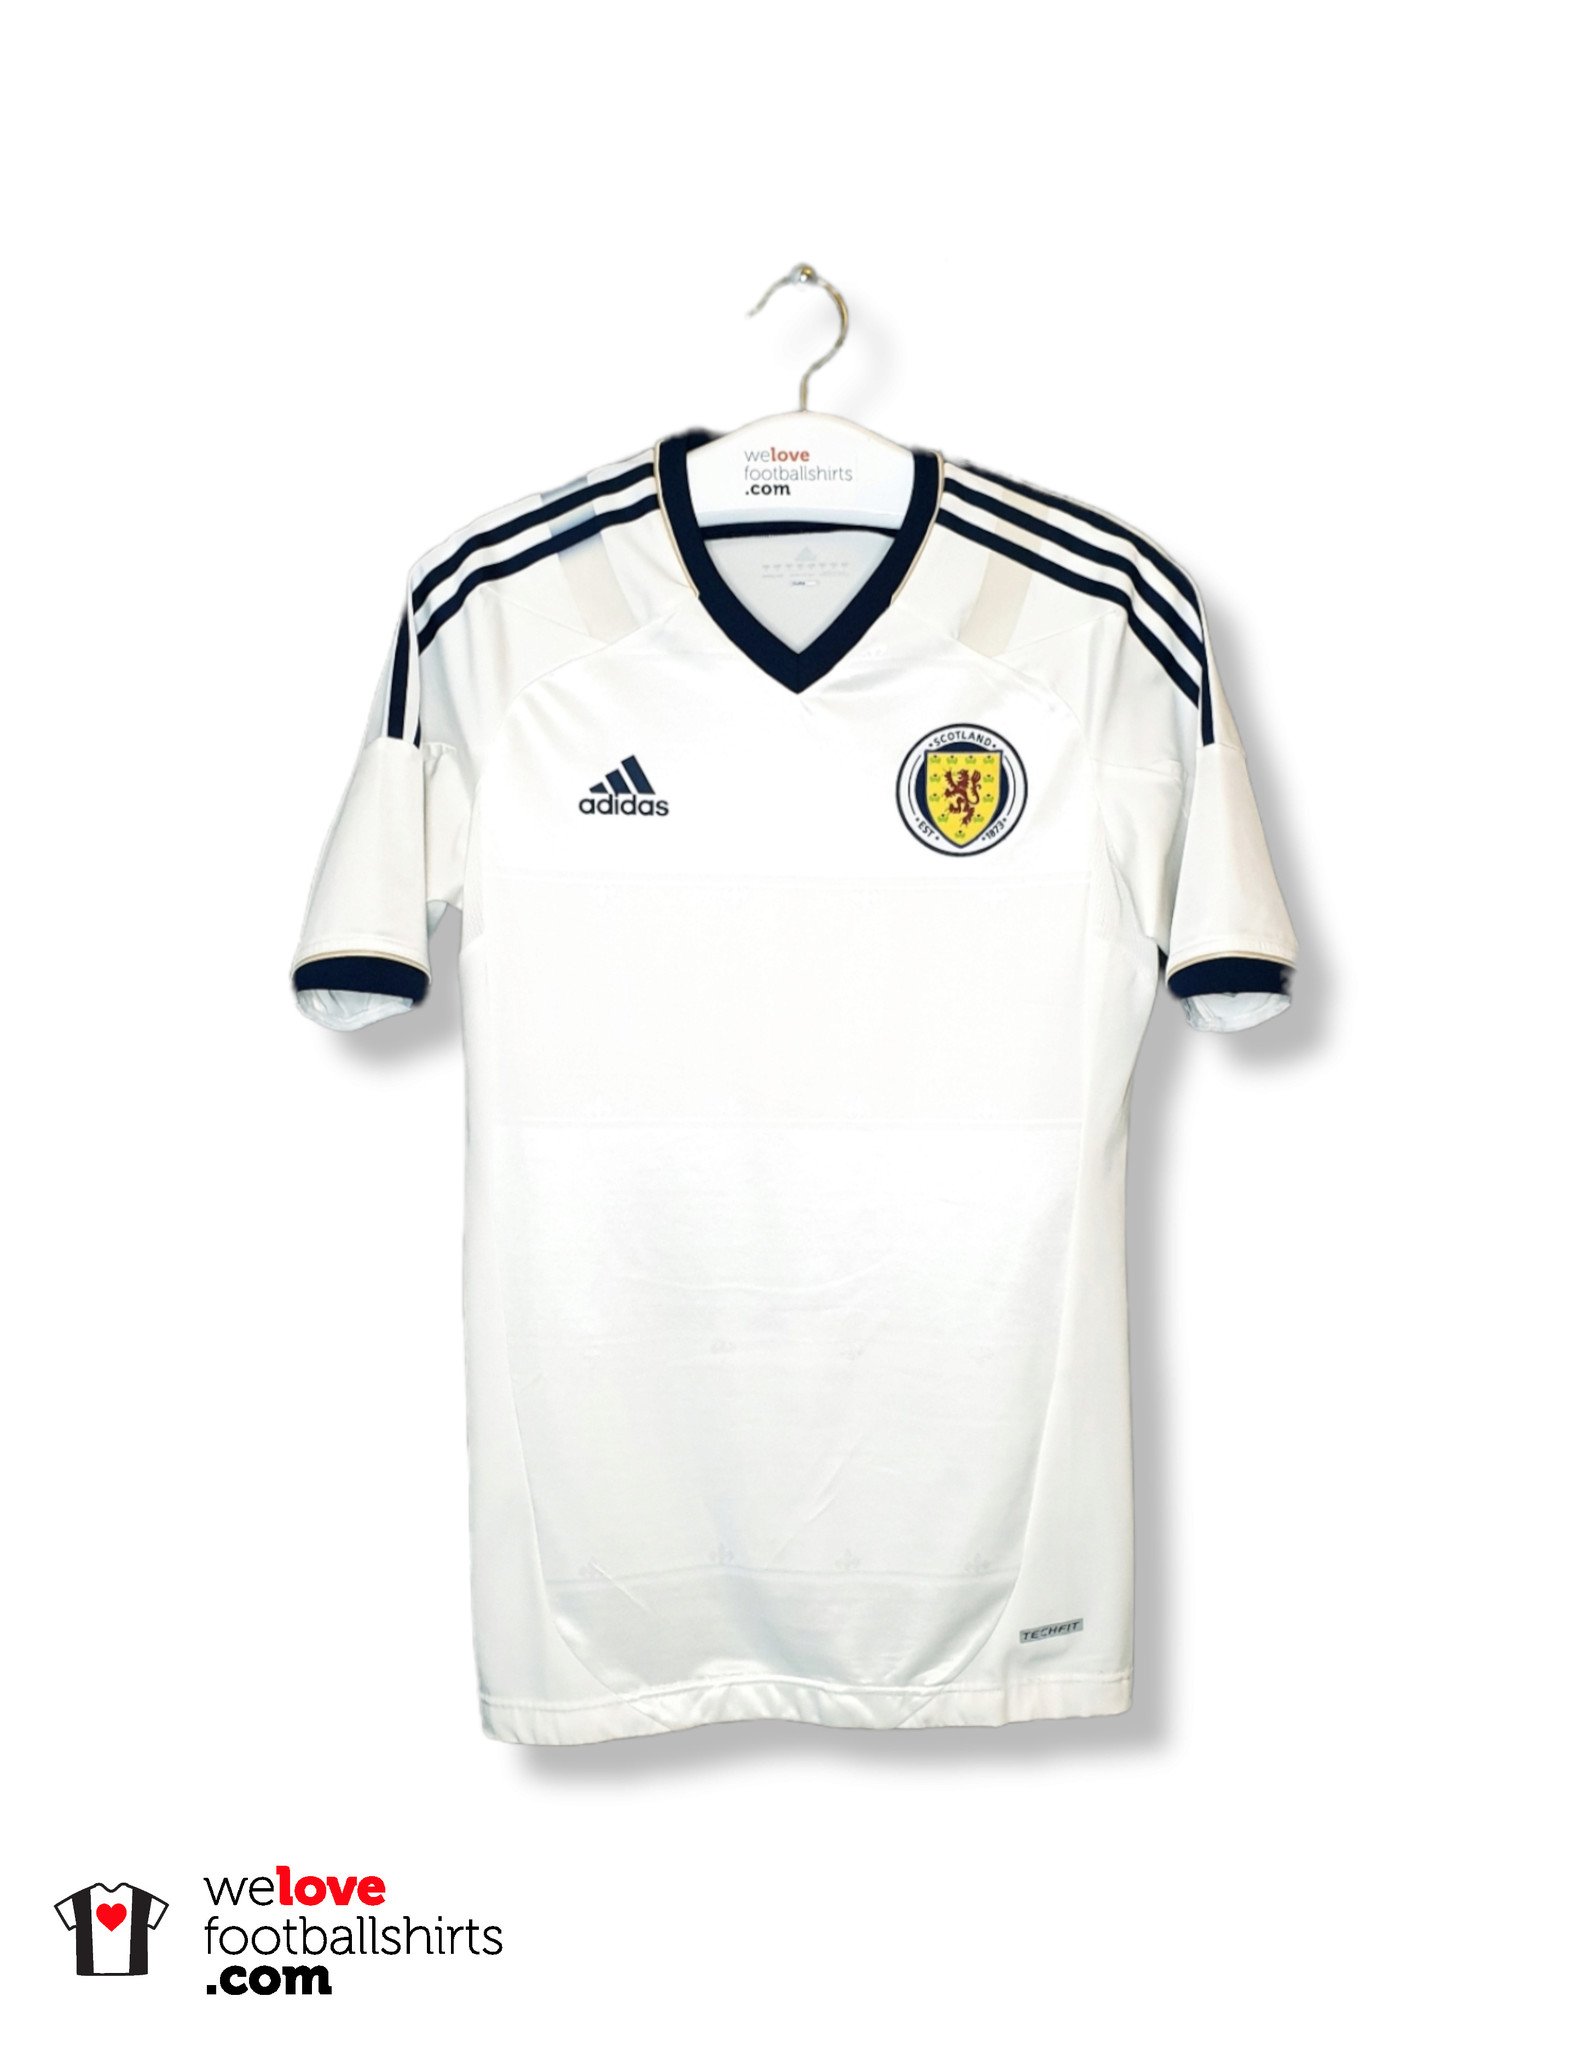 adidas Rangers Away Memorabilia Football Shirts (Scottish Clubs